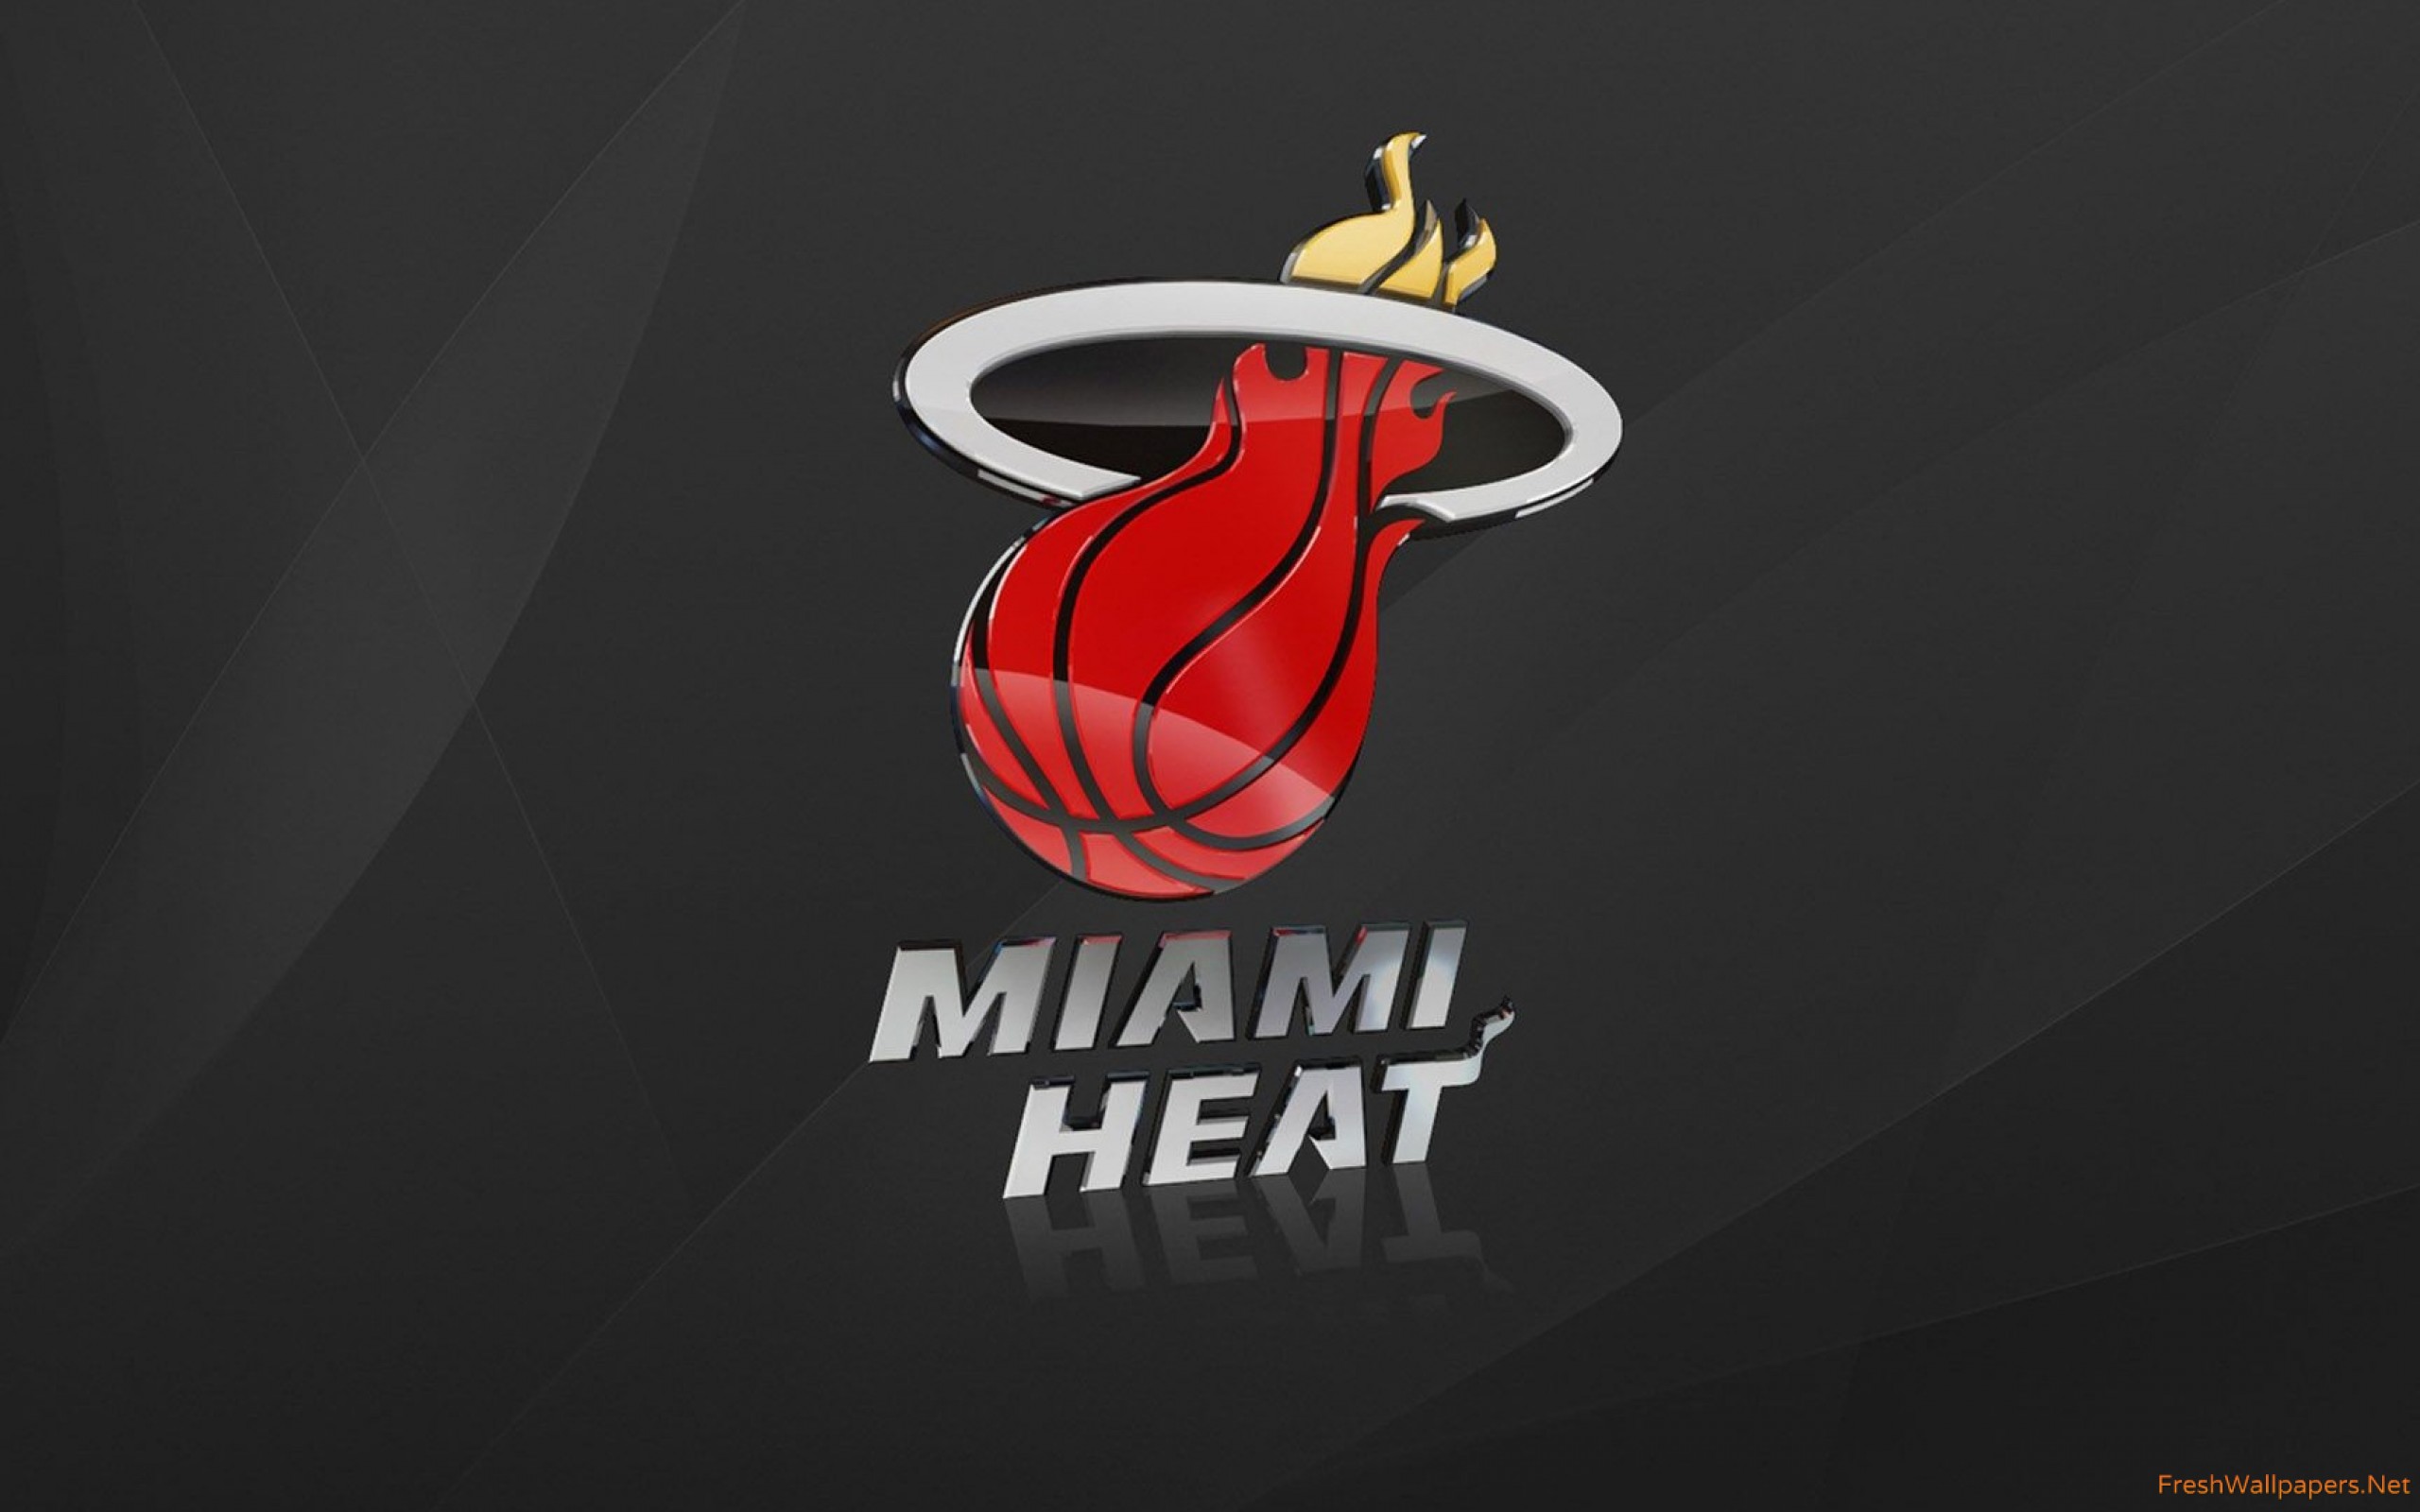 Miami Heat Logo Wallpaper Freshwallpaper